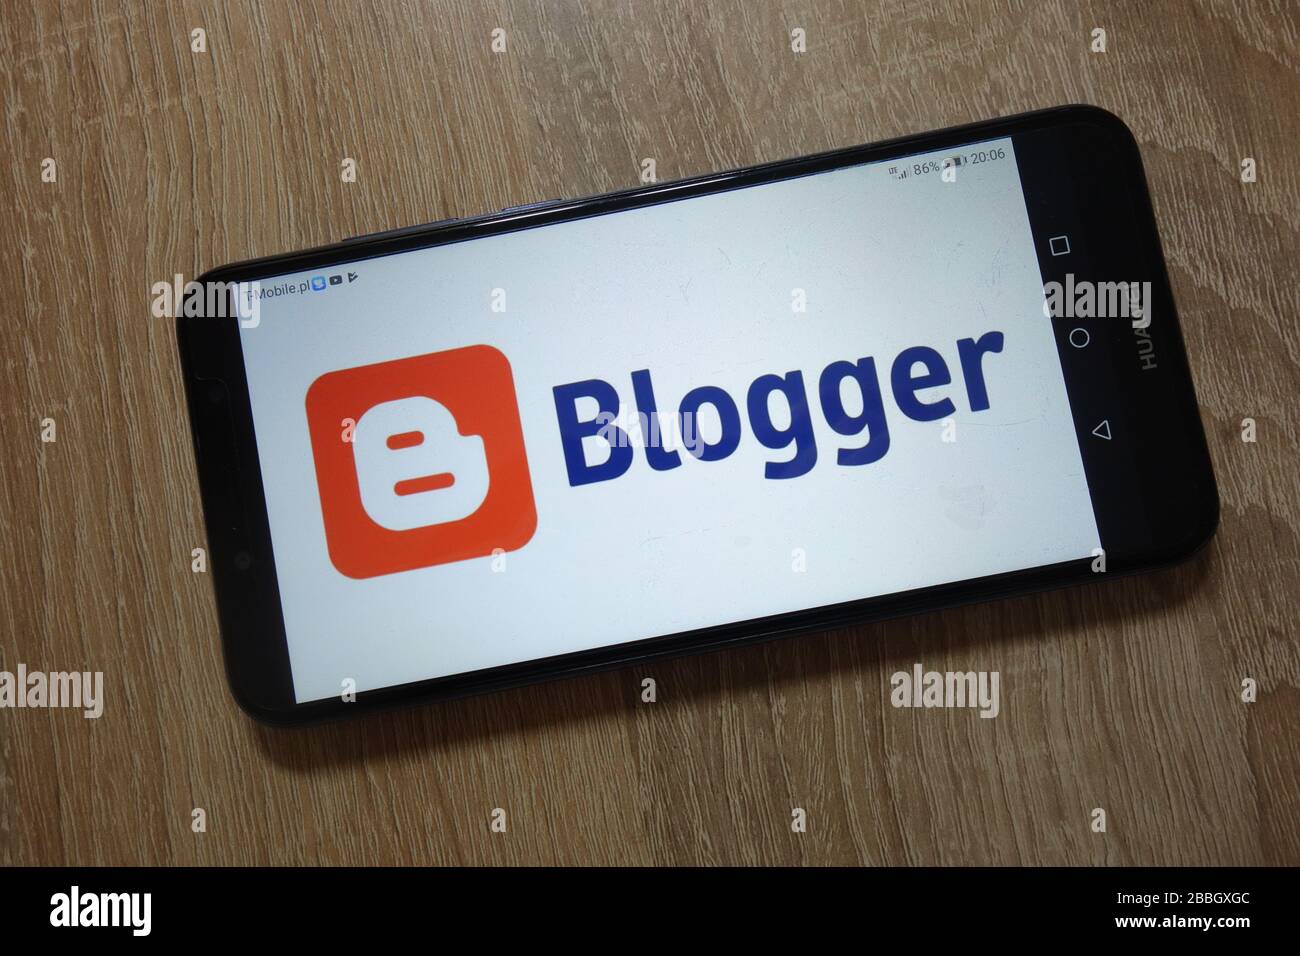 Blogger logo displayed on smartphone Stock Photo